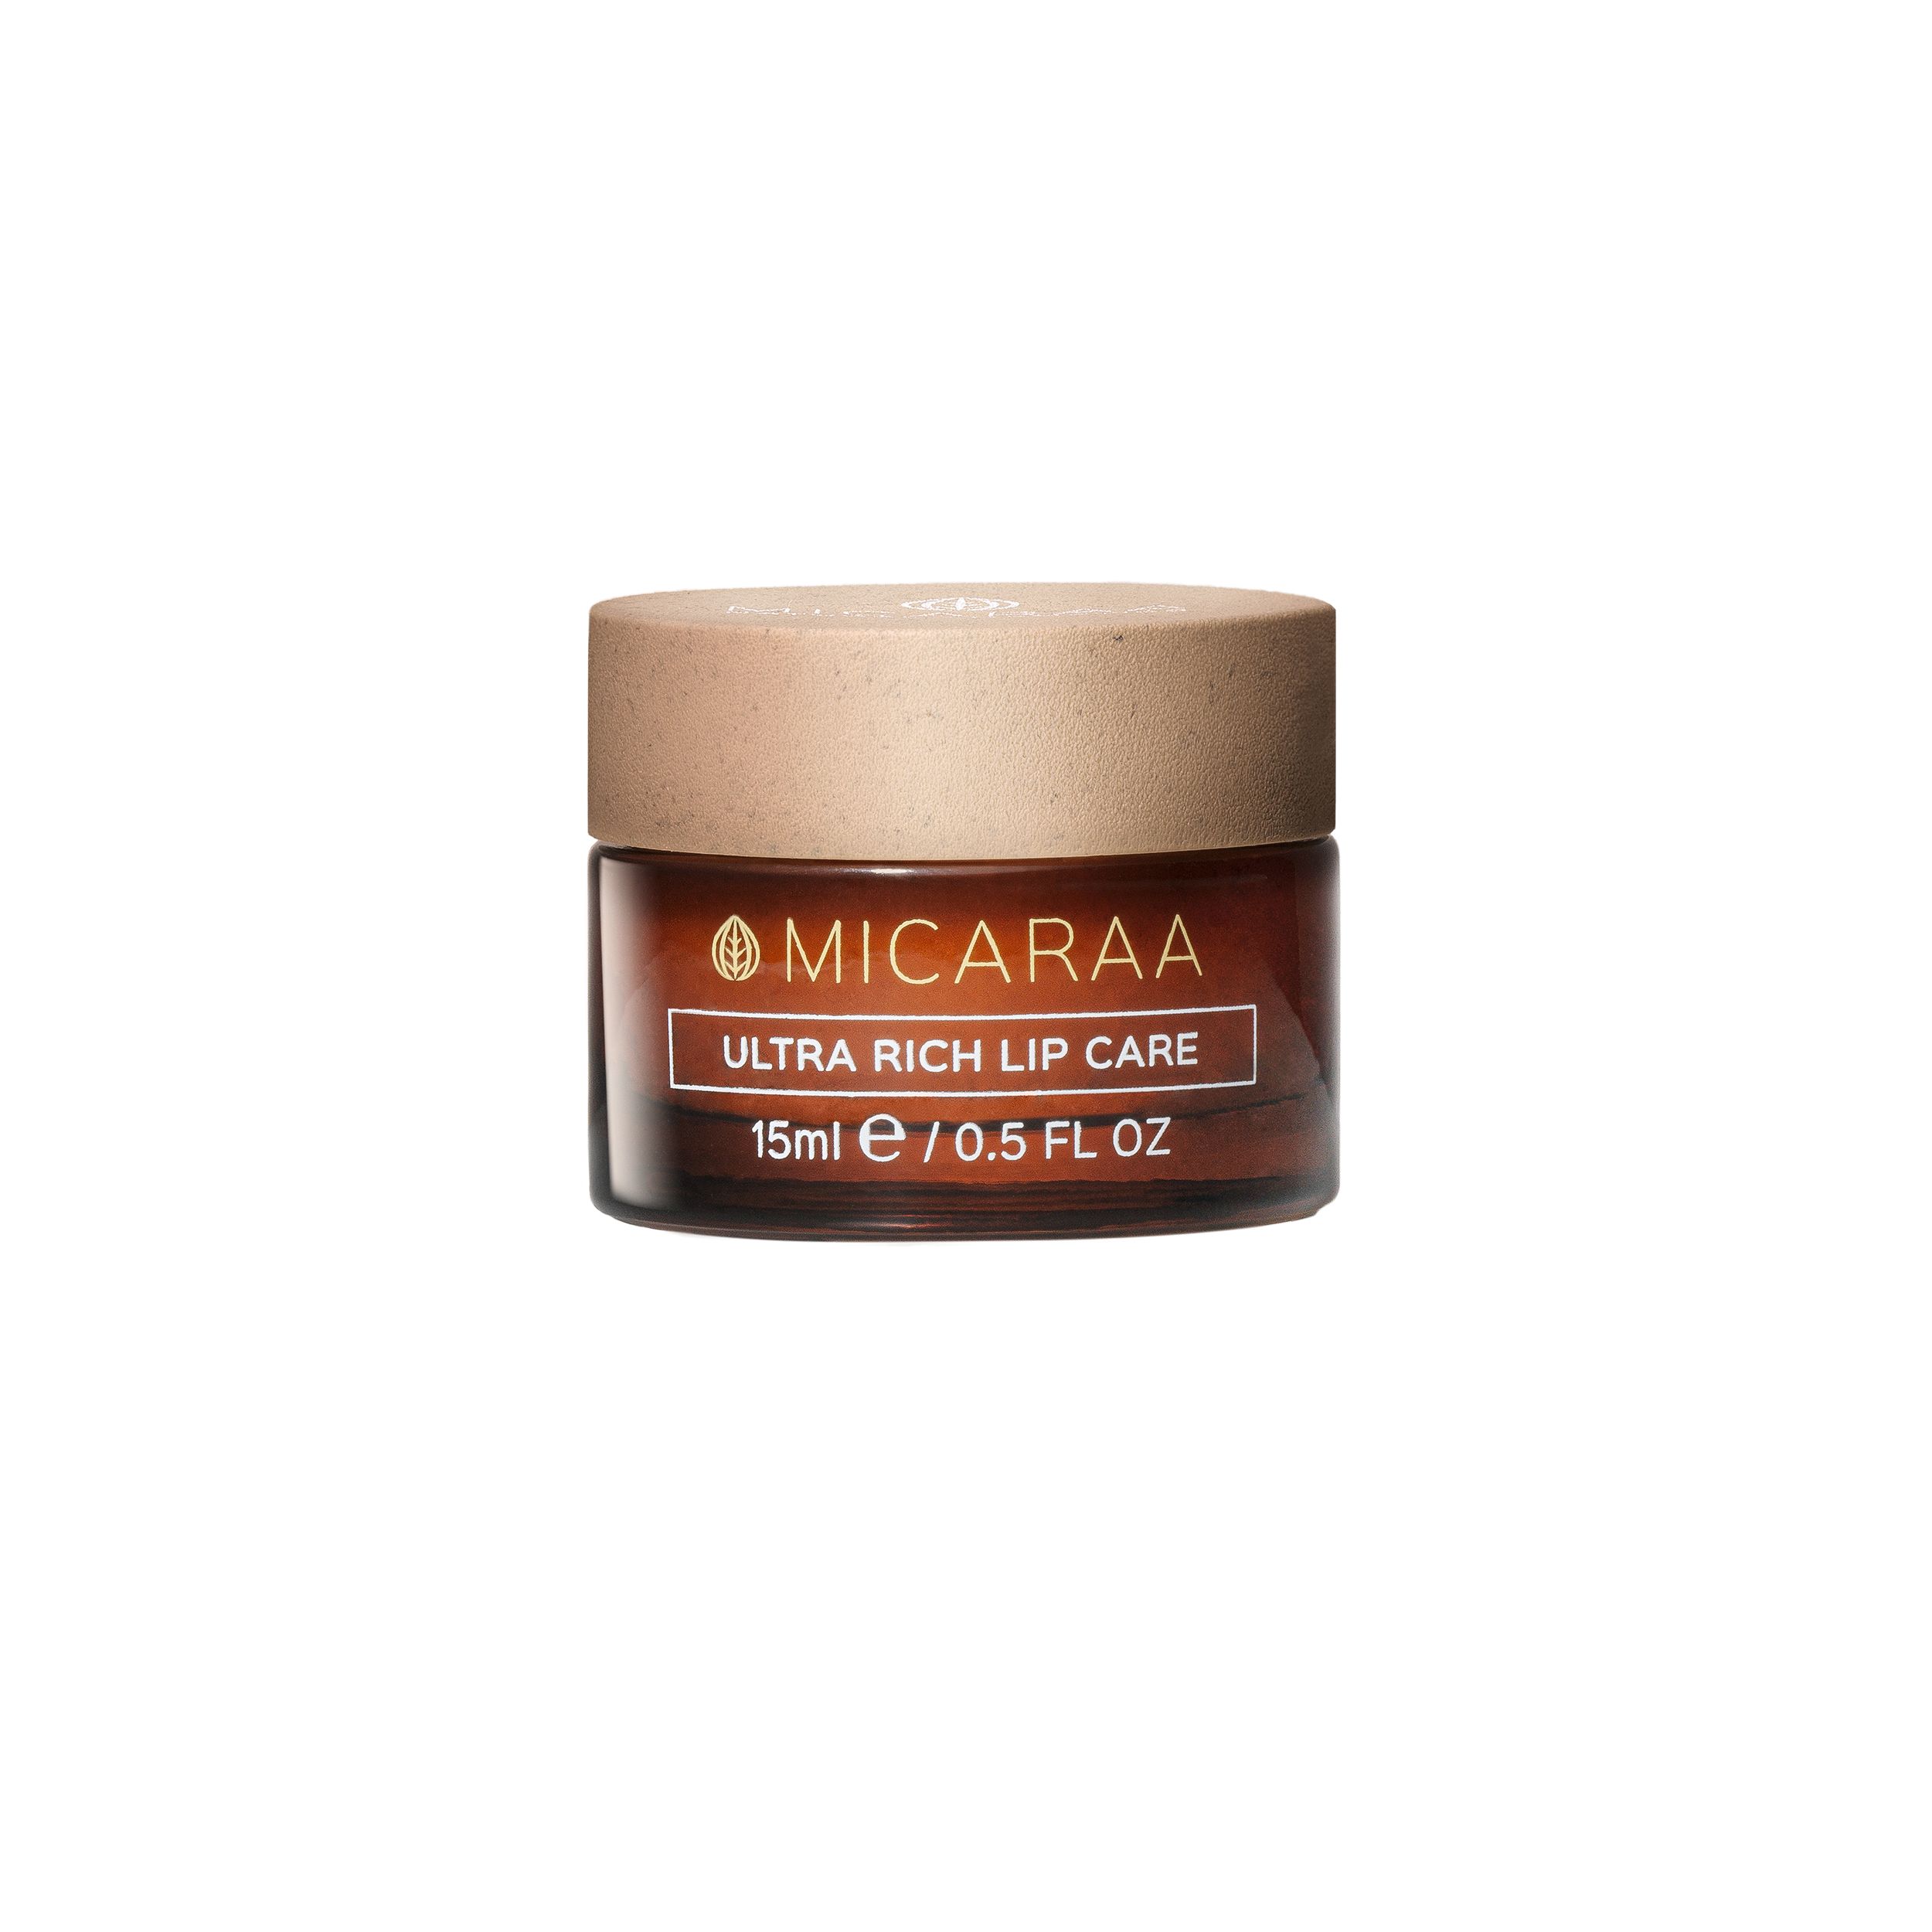 MICARAA Ultra Rich Lip Care